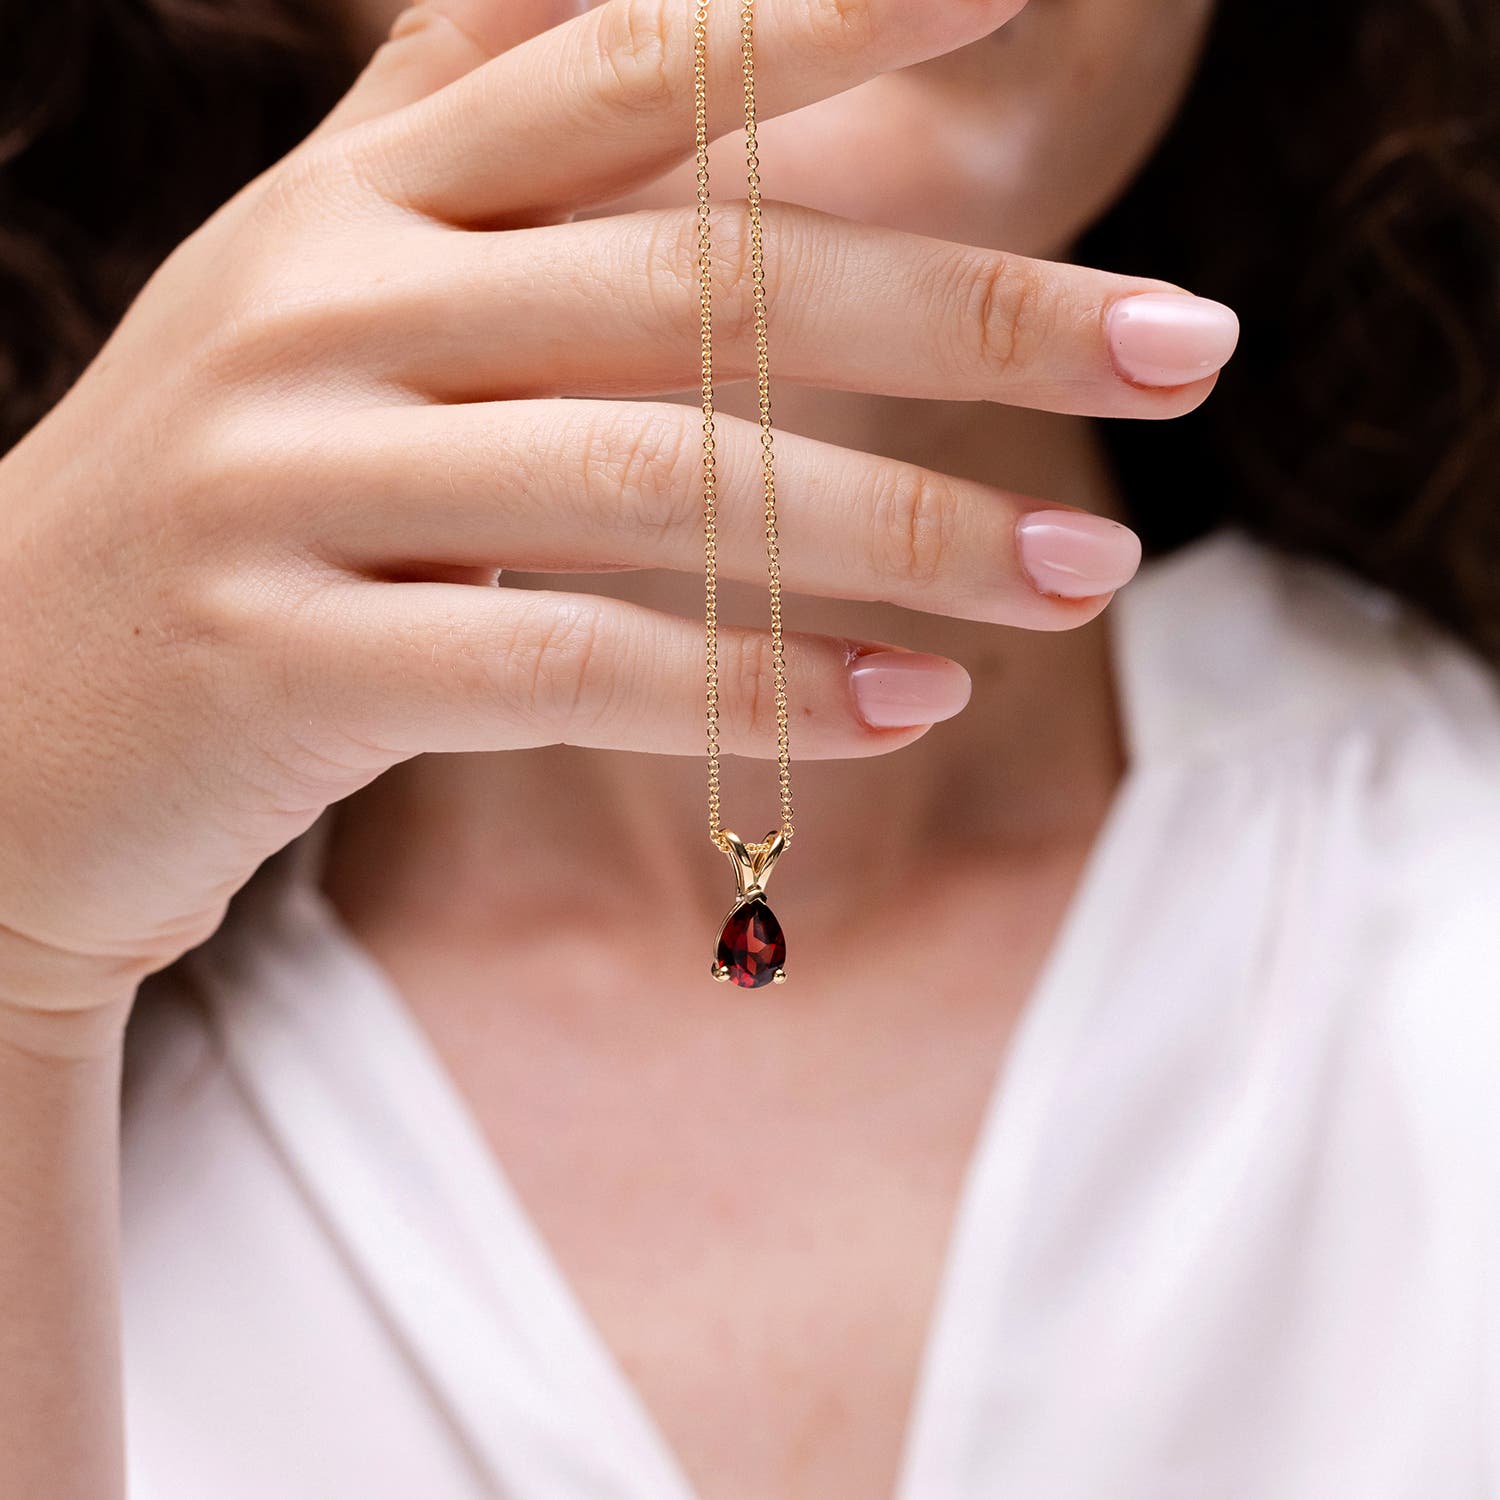 Pendant Necklaces for Women with Unique Designs | Angara